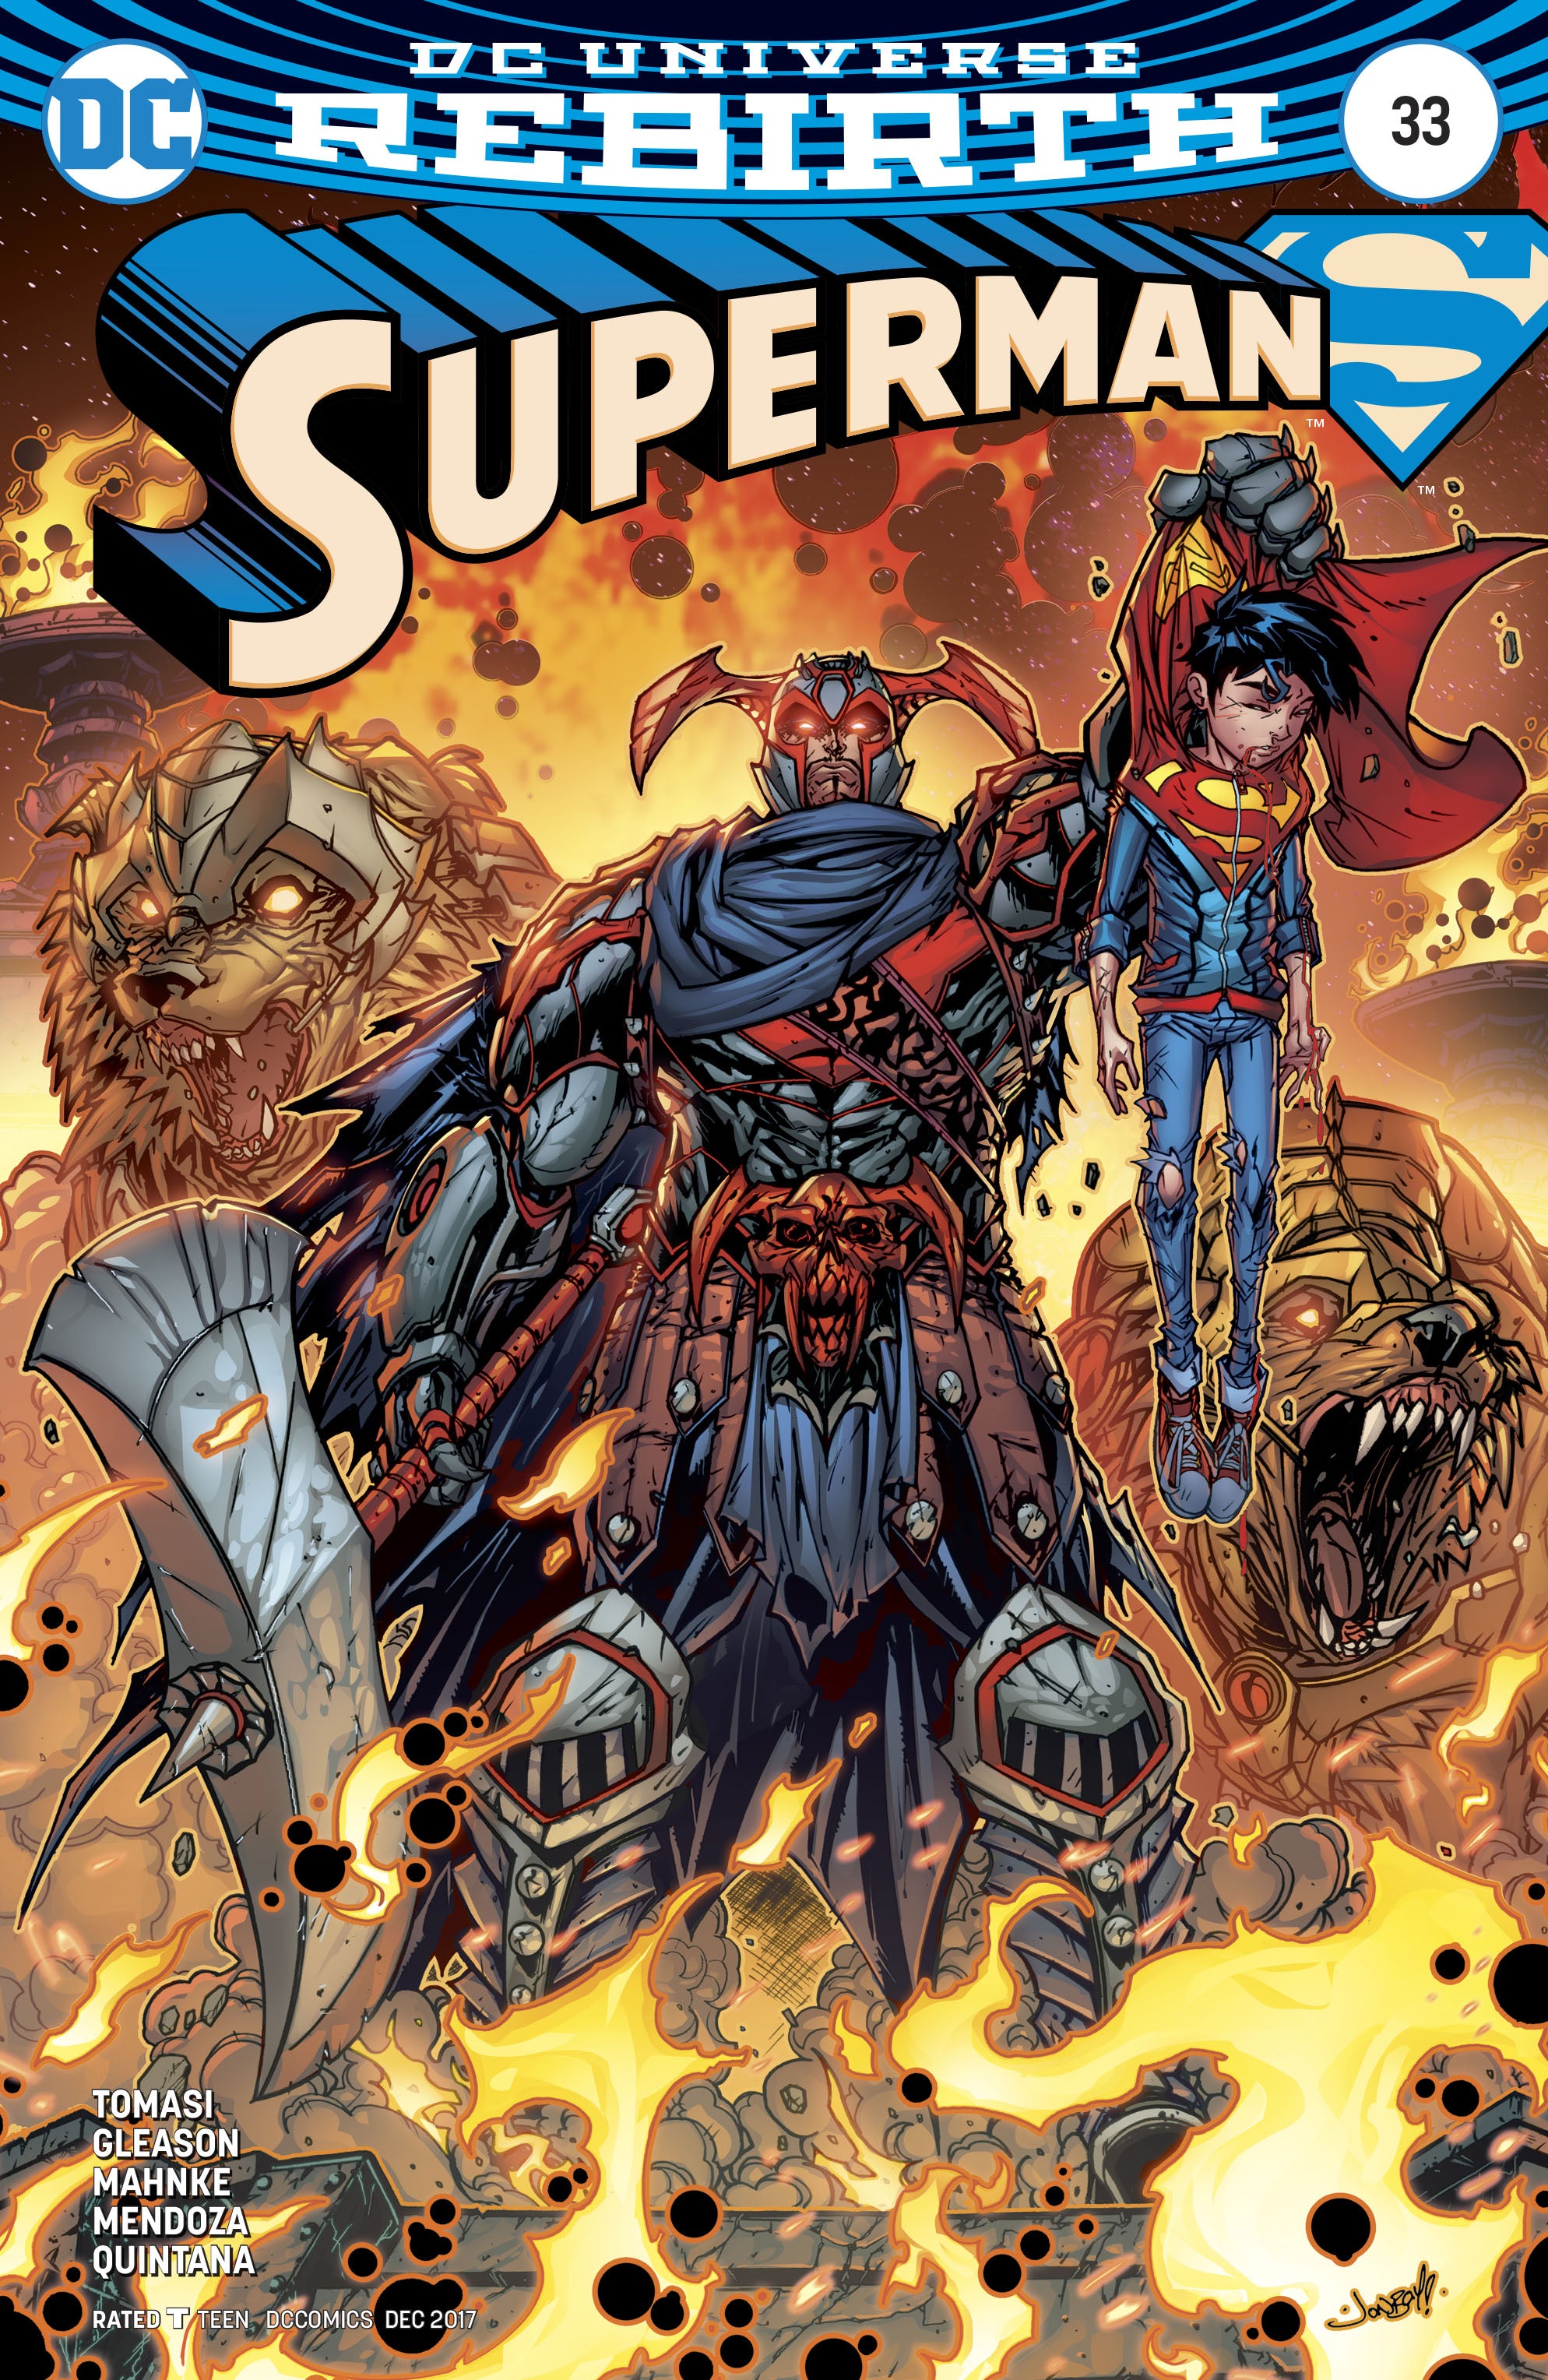 SUPERMAN Vol 4 #33 VAR ED | Game Master's Emporium (The New GME)